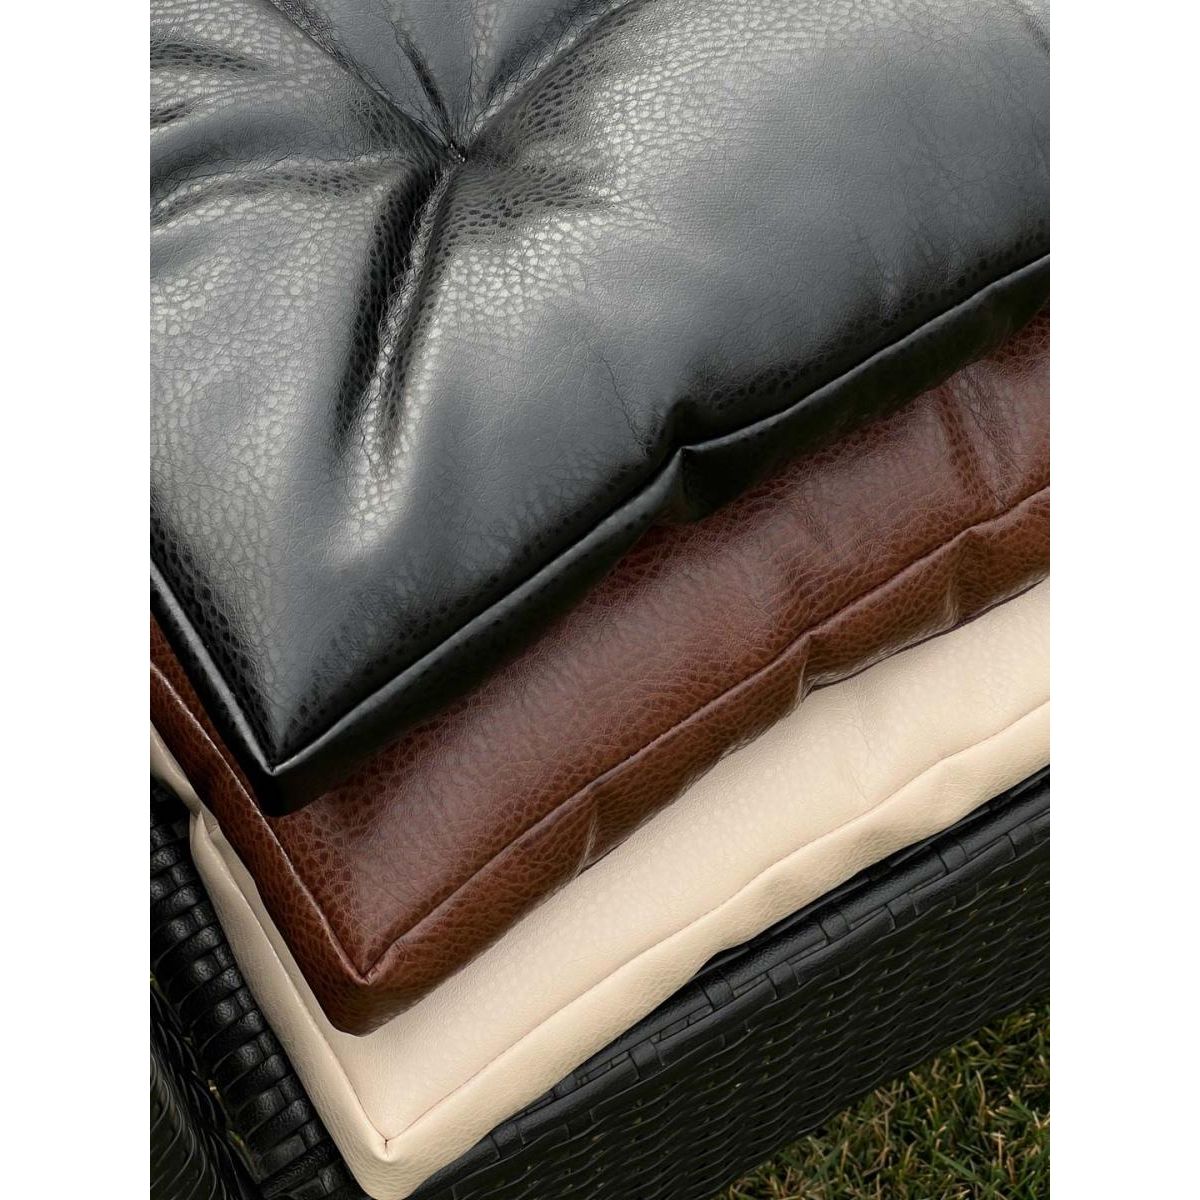 Подушка на стул Прованс из экокожи 40х40 см кремовая (34077) - фото 6